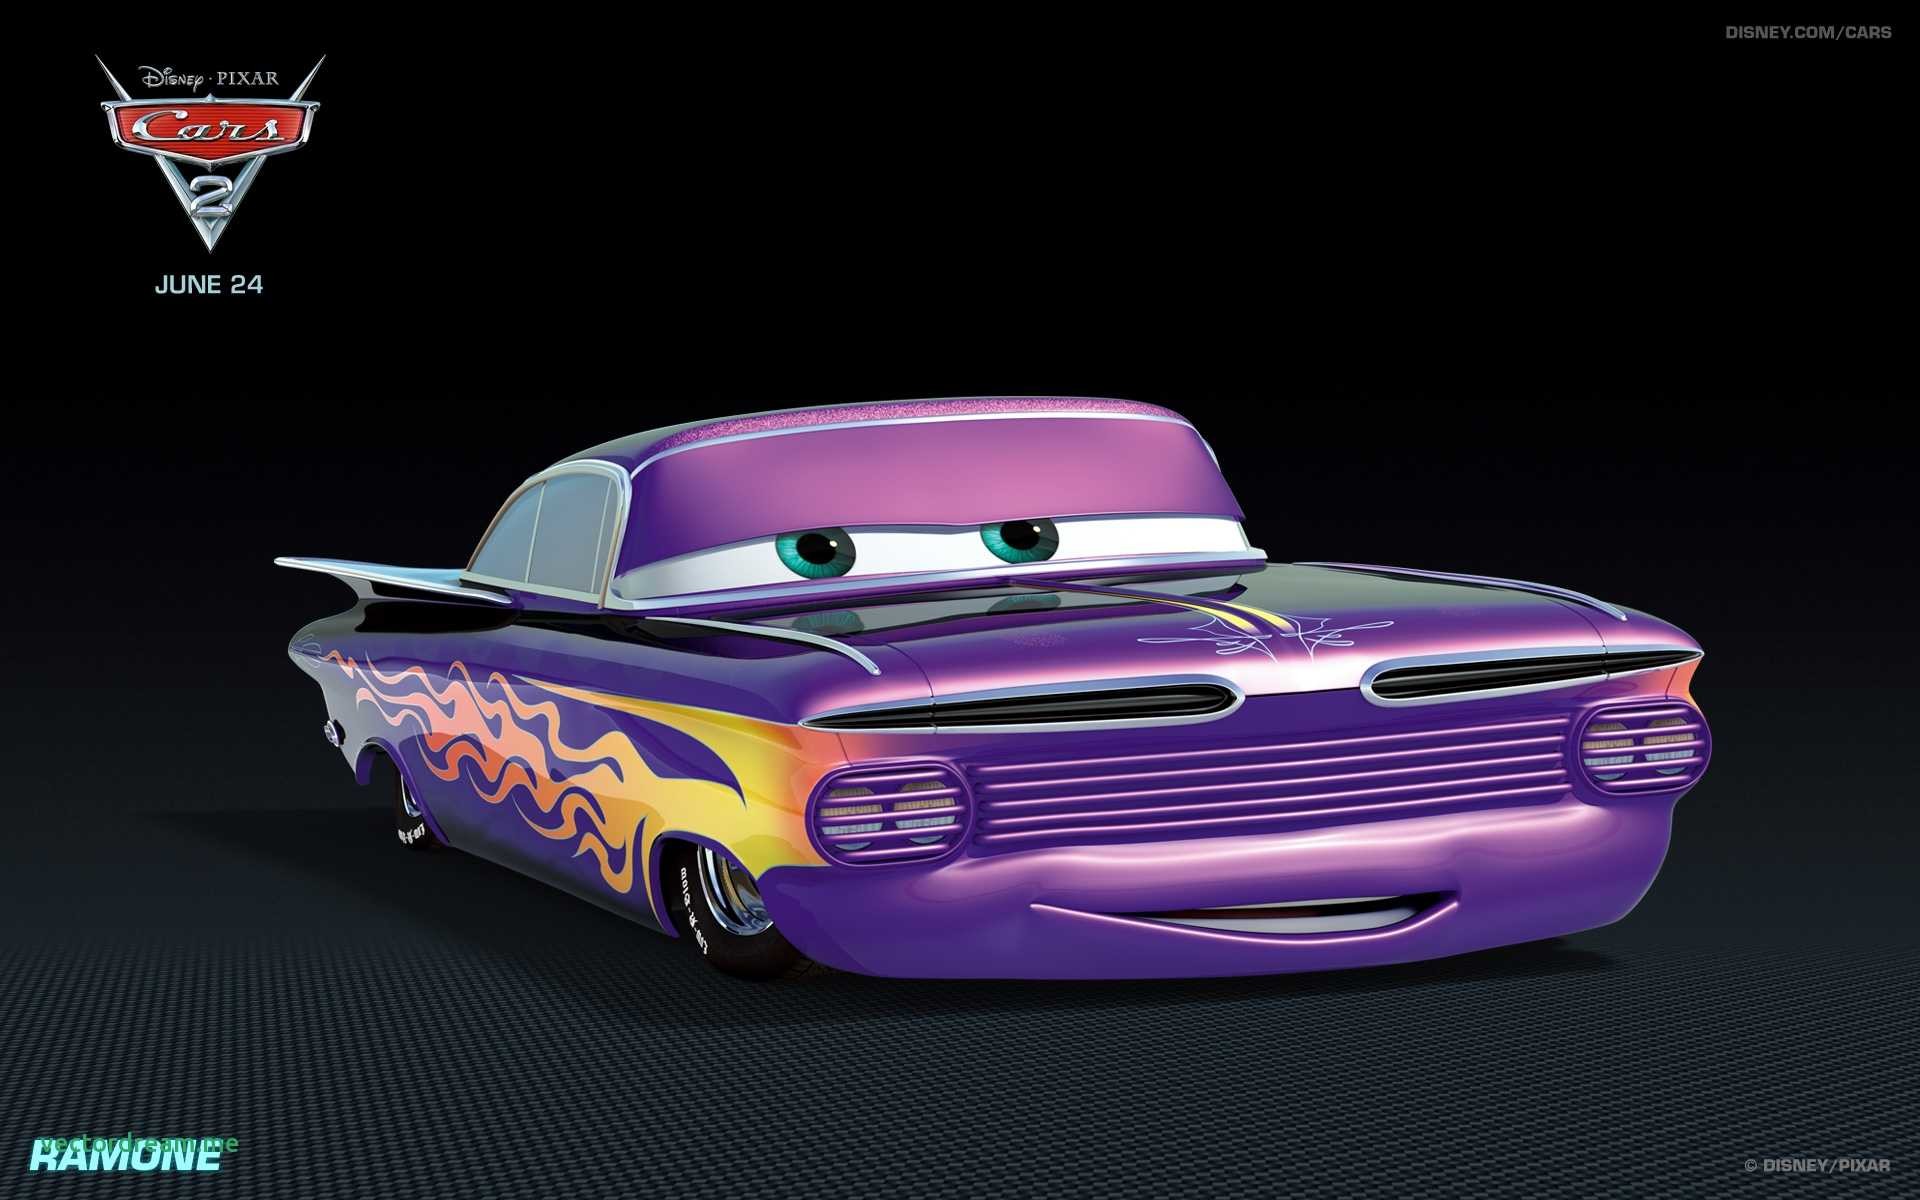 Cars Movie Wallpaper Hd Unique Disney Cars Backgrounds - Ramone - Lowrider Disney/pixar Cars Movie - HD Wallpaper 